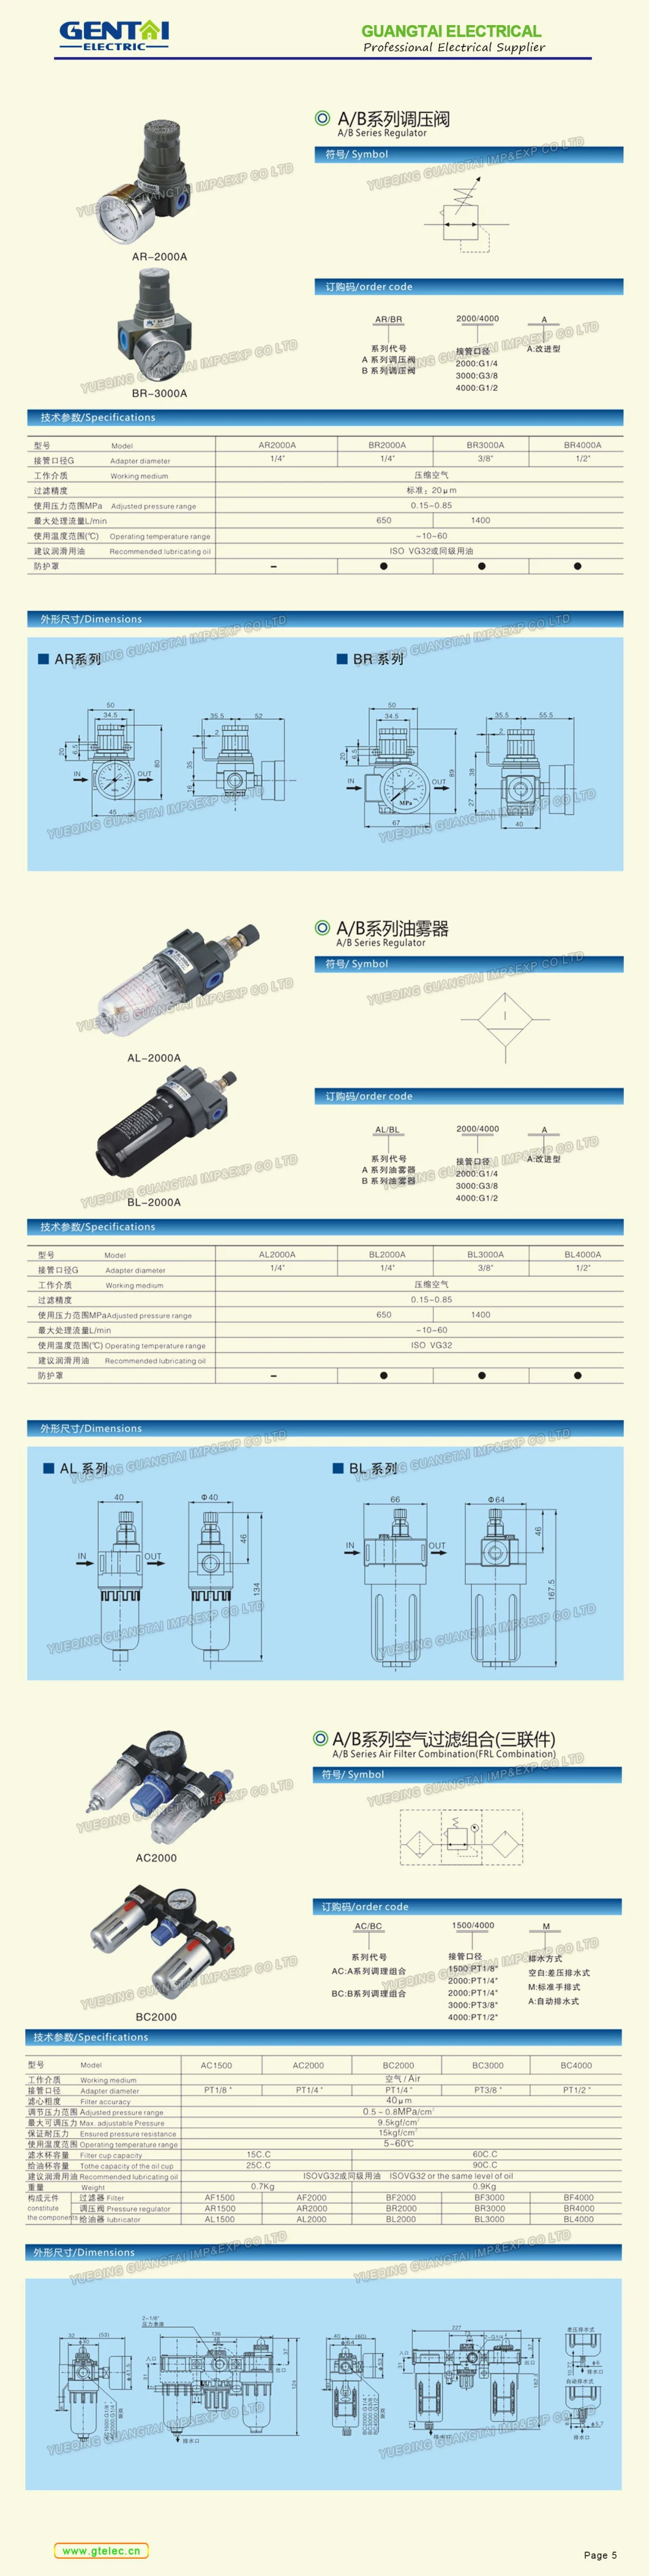 AC4000-04 Pnecumatic Three Units Frl Combination Air Filter Regulator